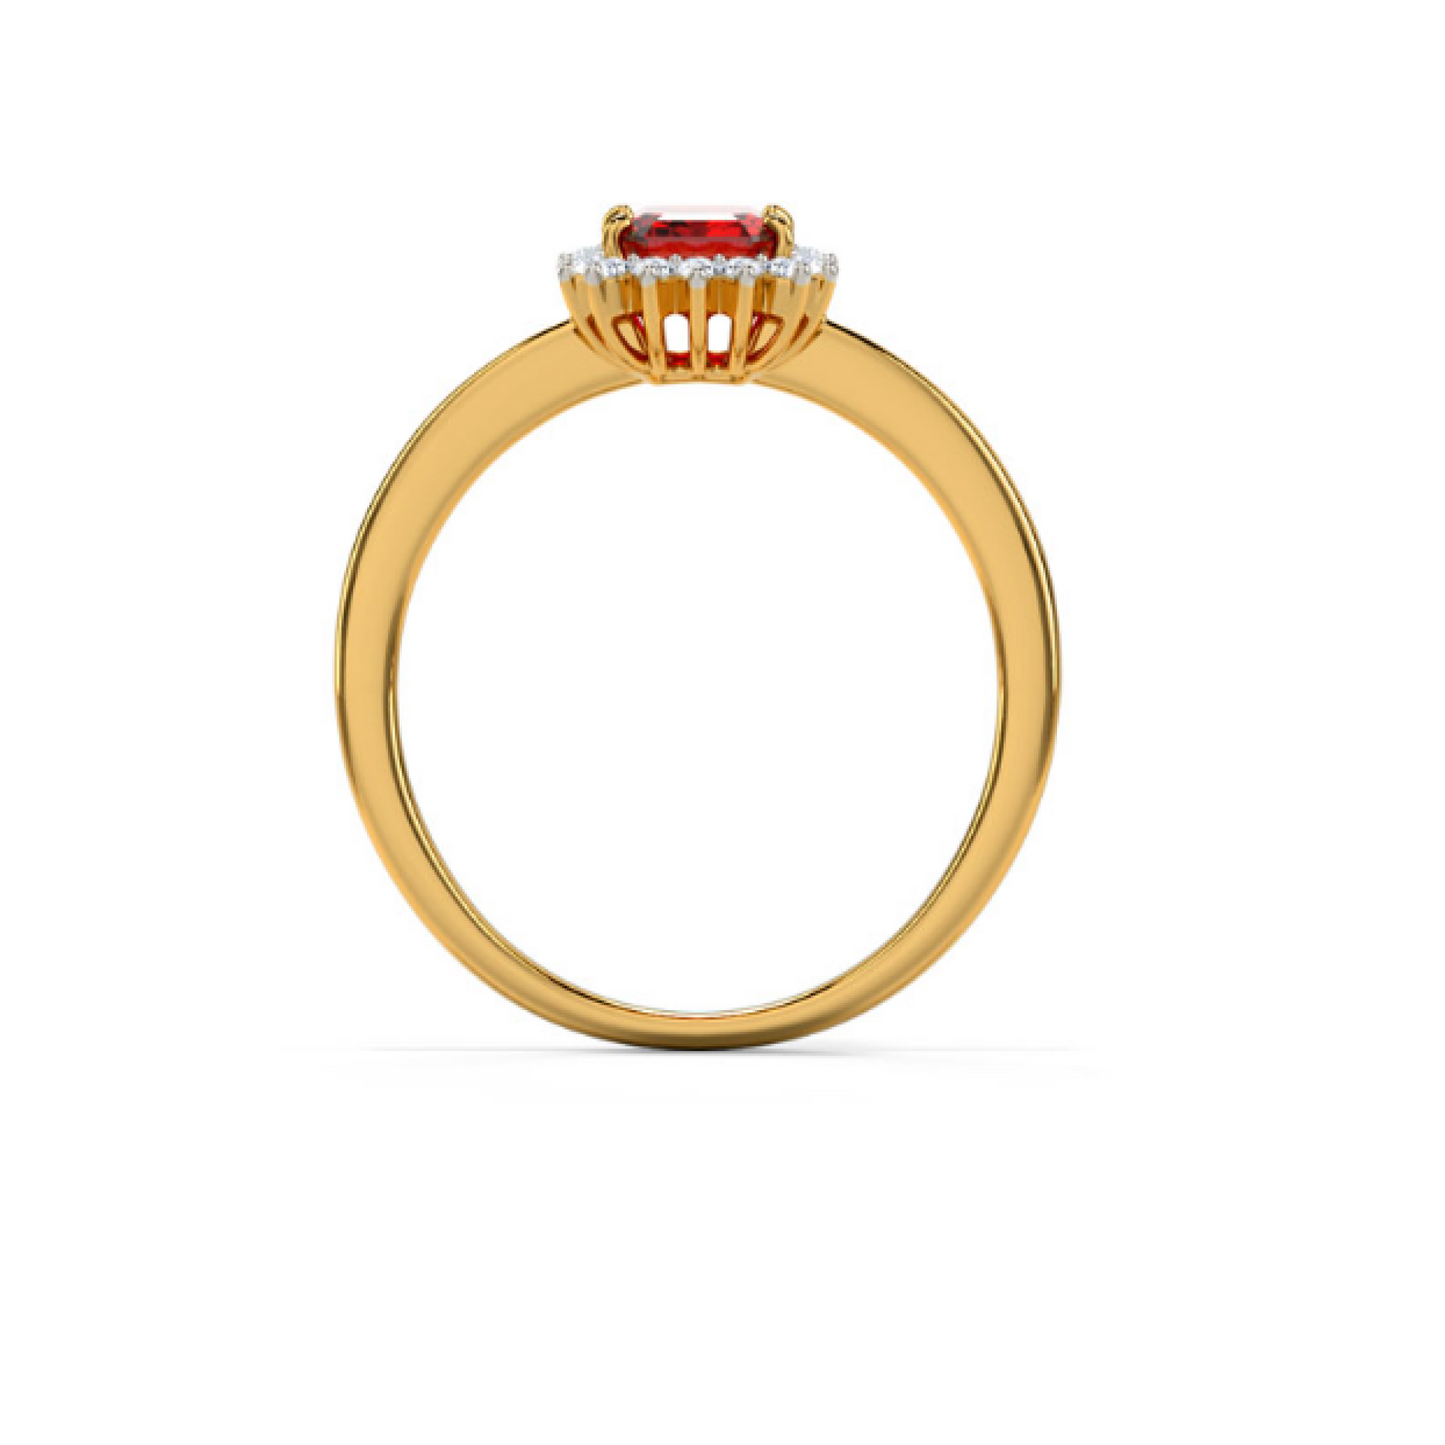 Ruby Gemstone And Diamond Engagement Ring www.24kdiamond.com